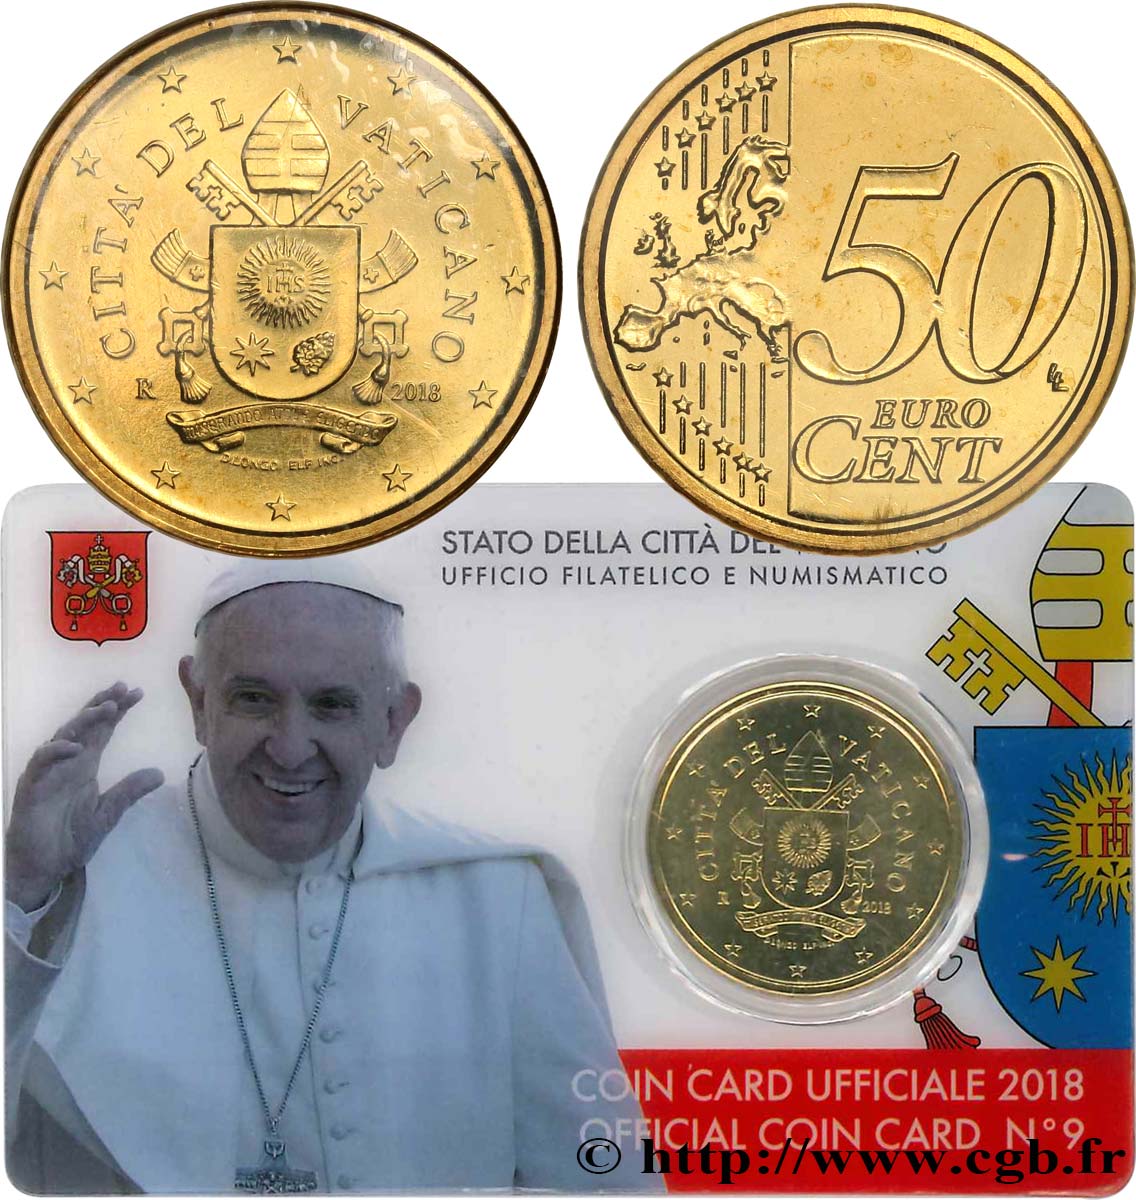 VATIKAN Coin-Card (n°9) 50 Cent ARMOIRIES DU PAPE FRANÇOIS
 2018